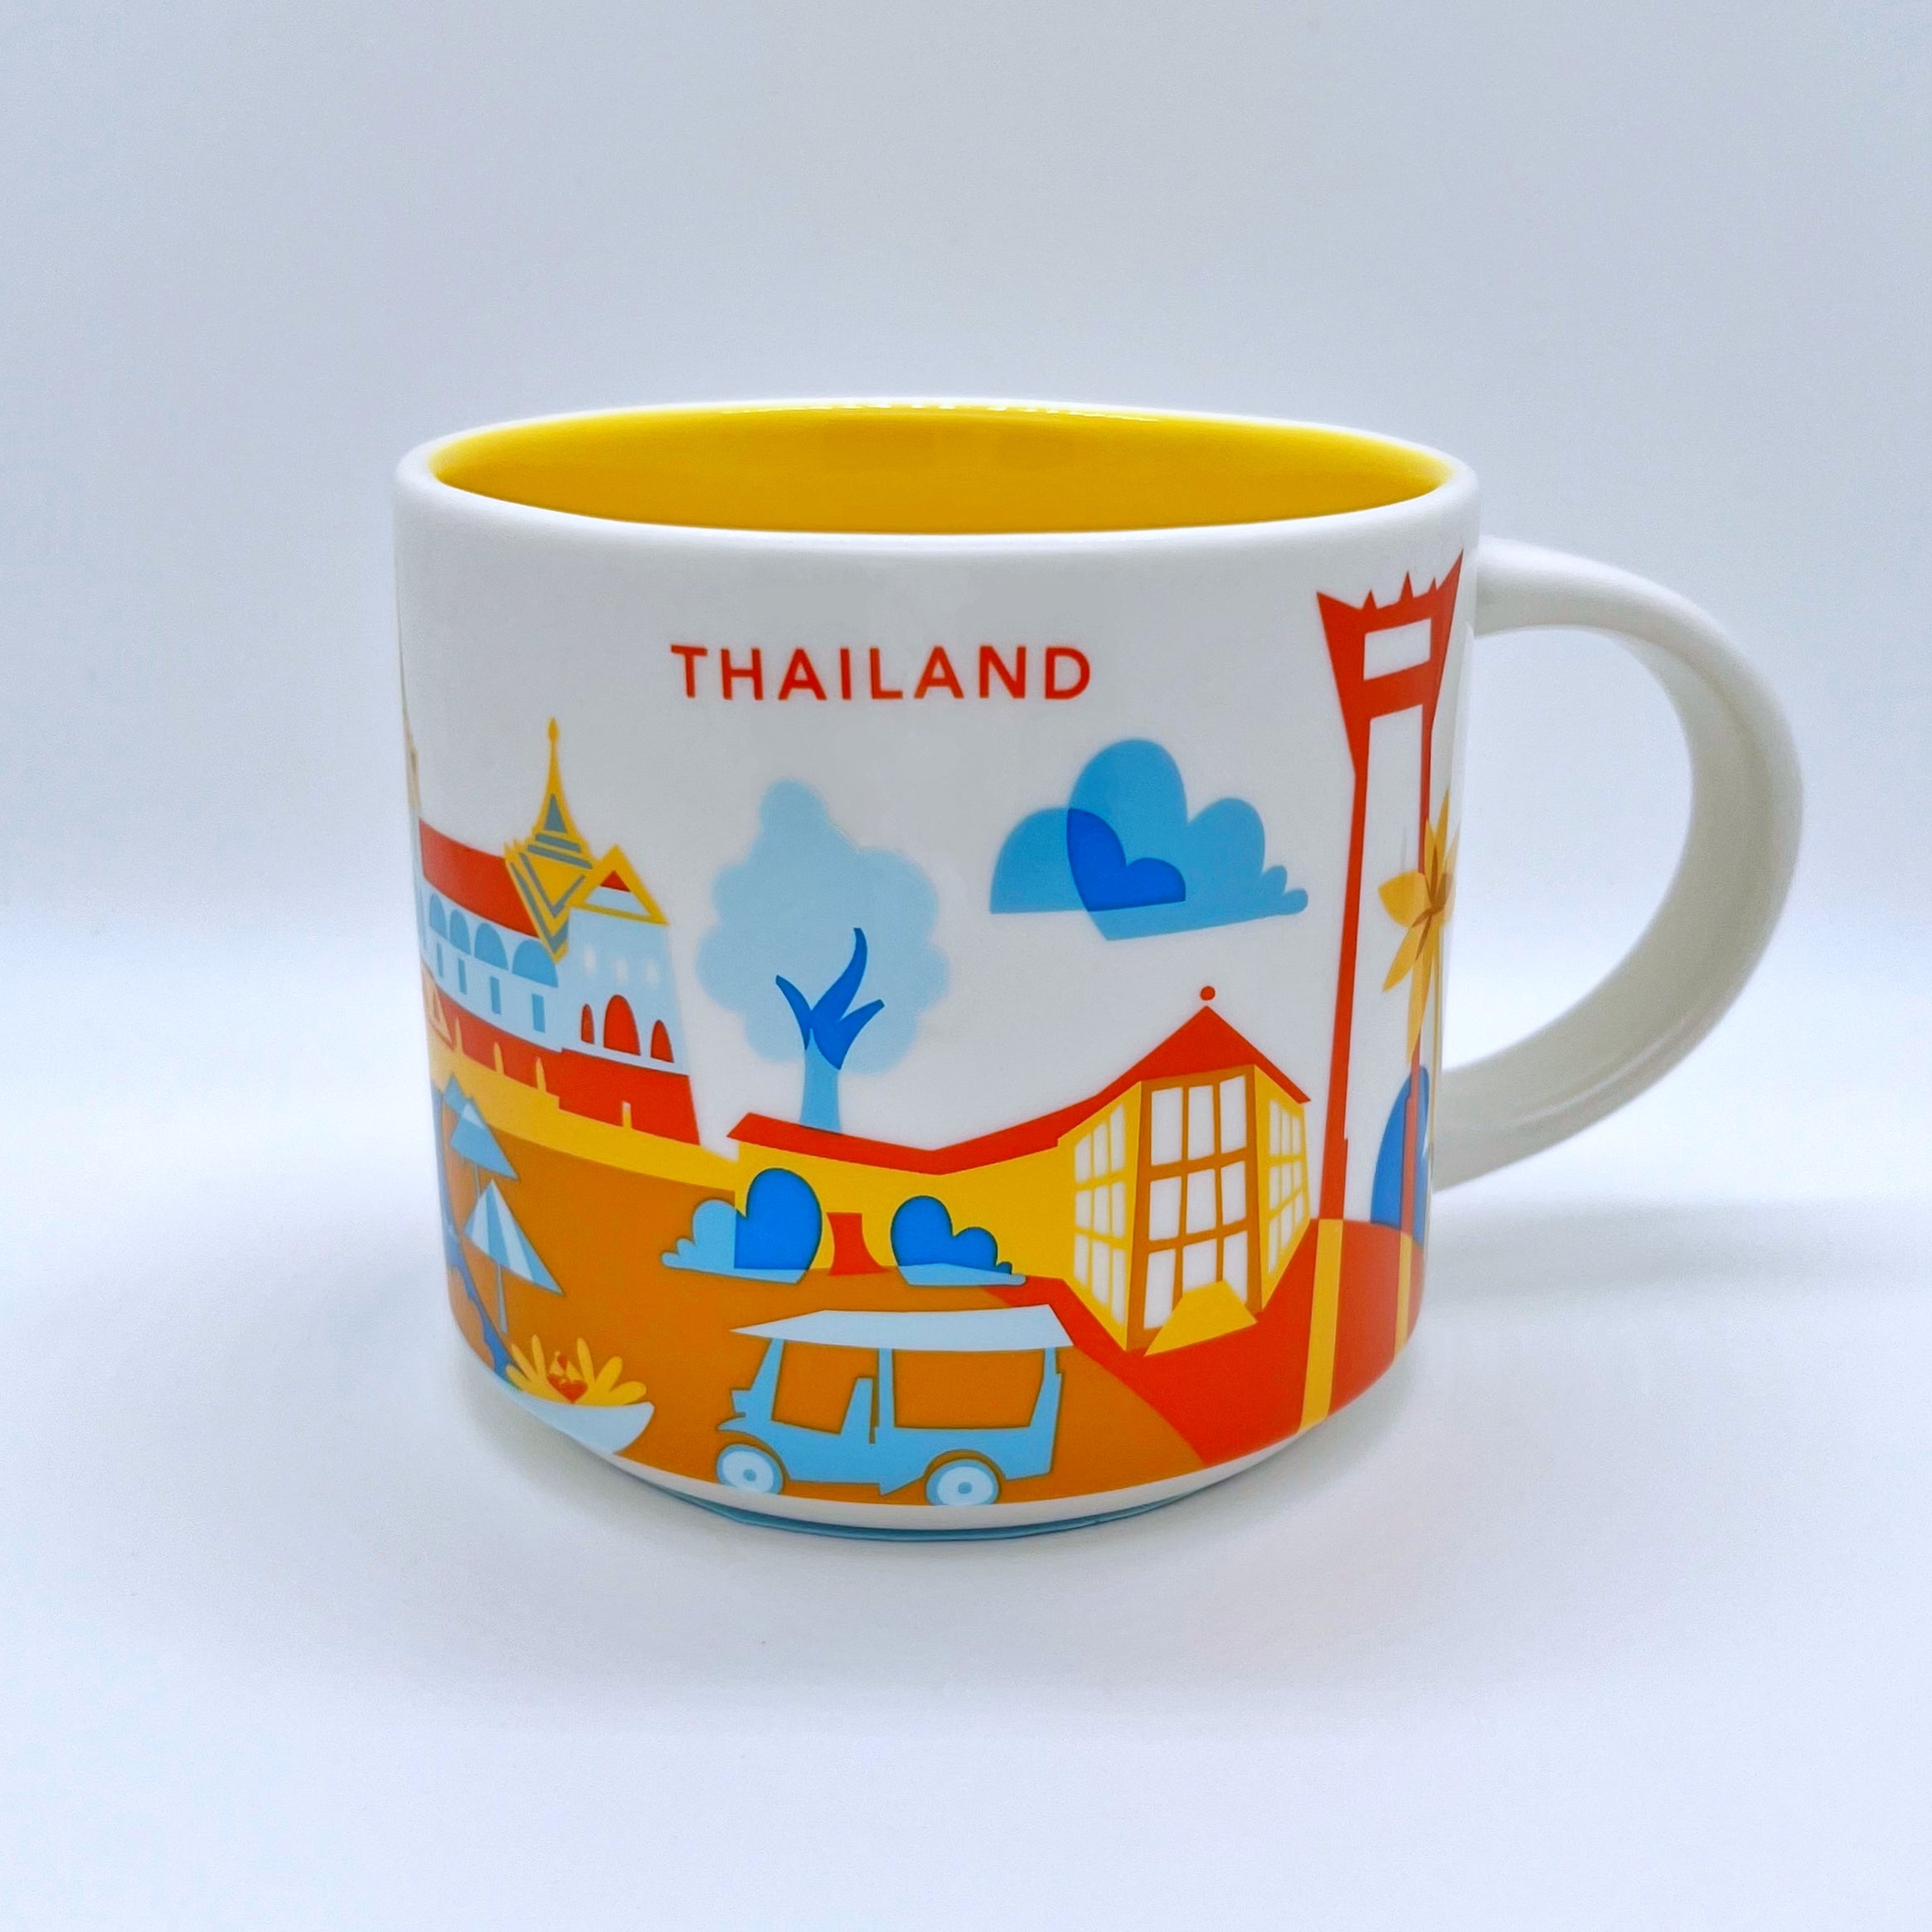 Thailand Country Kaffee Tasse